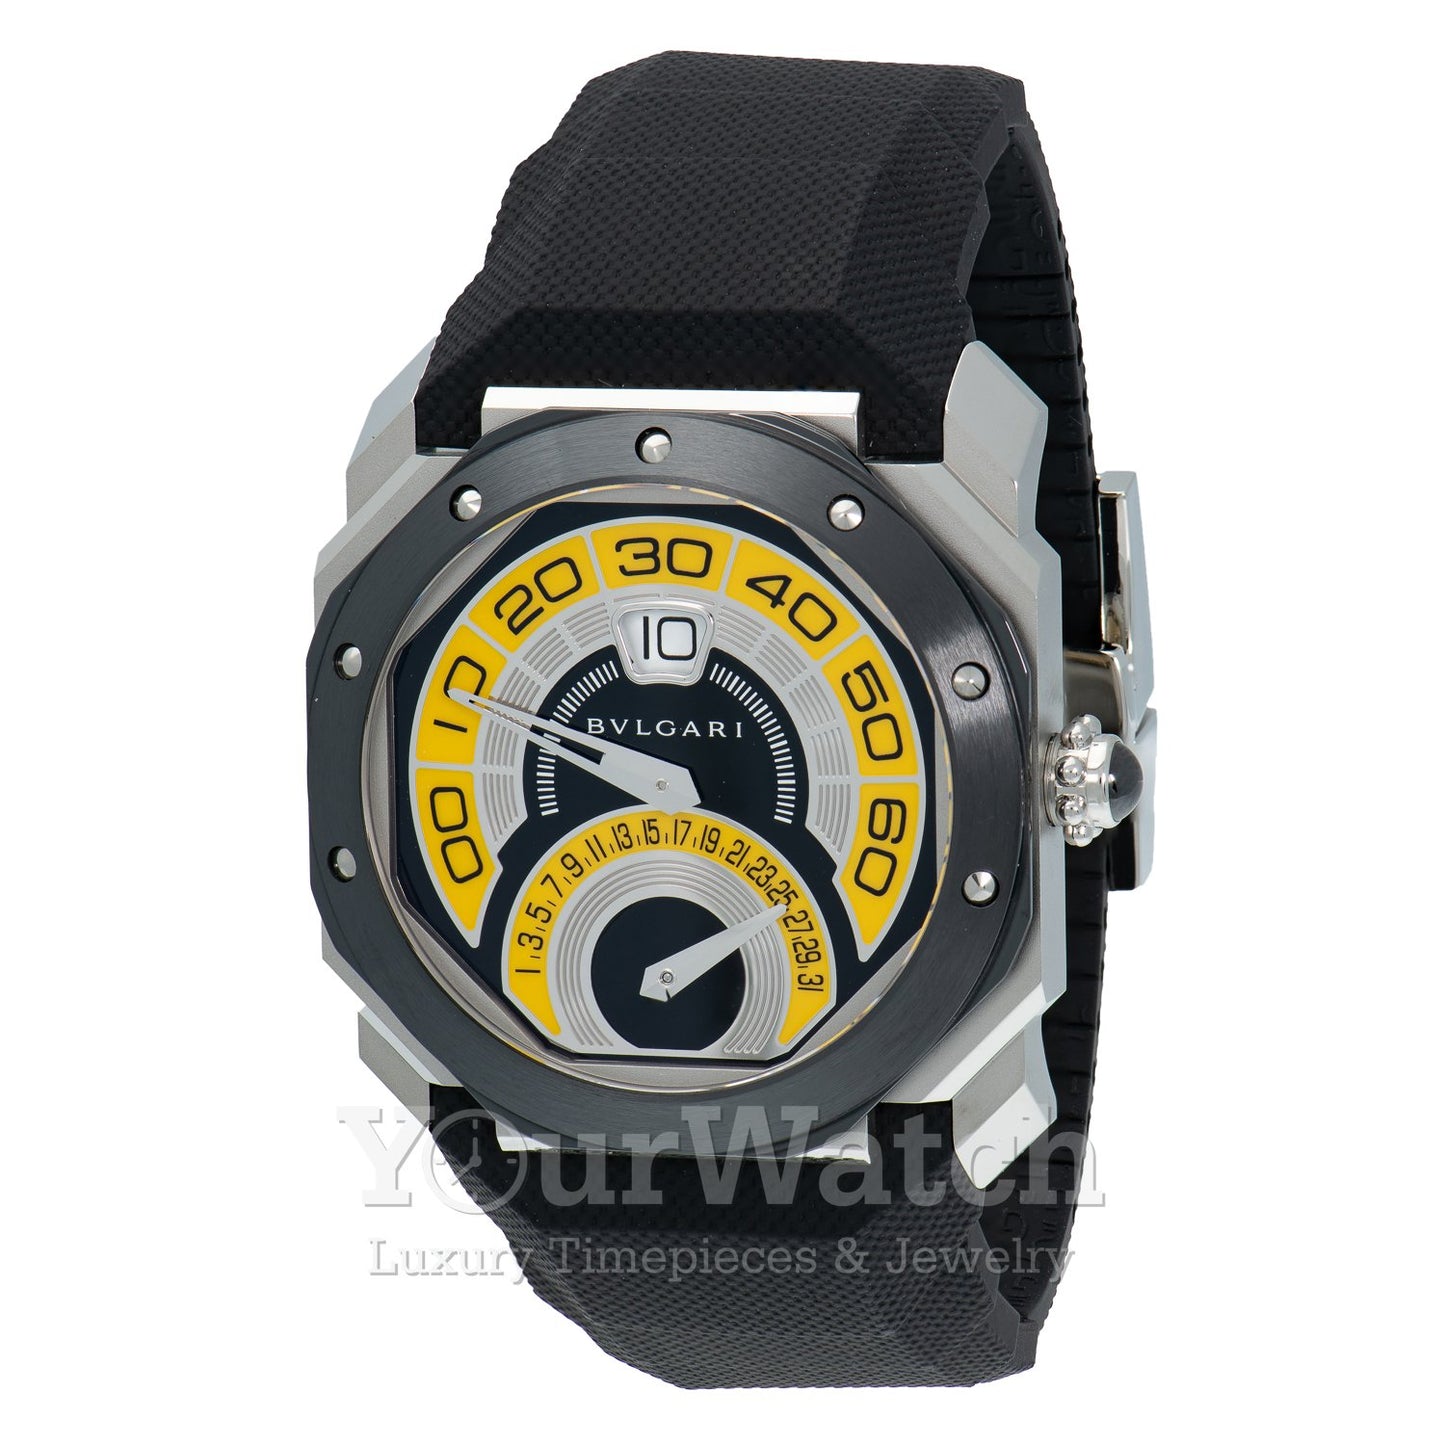 Bvlgari Octo Bi Retro Automatic Men's Watch 102210